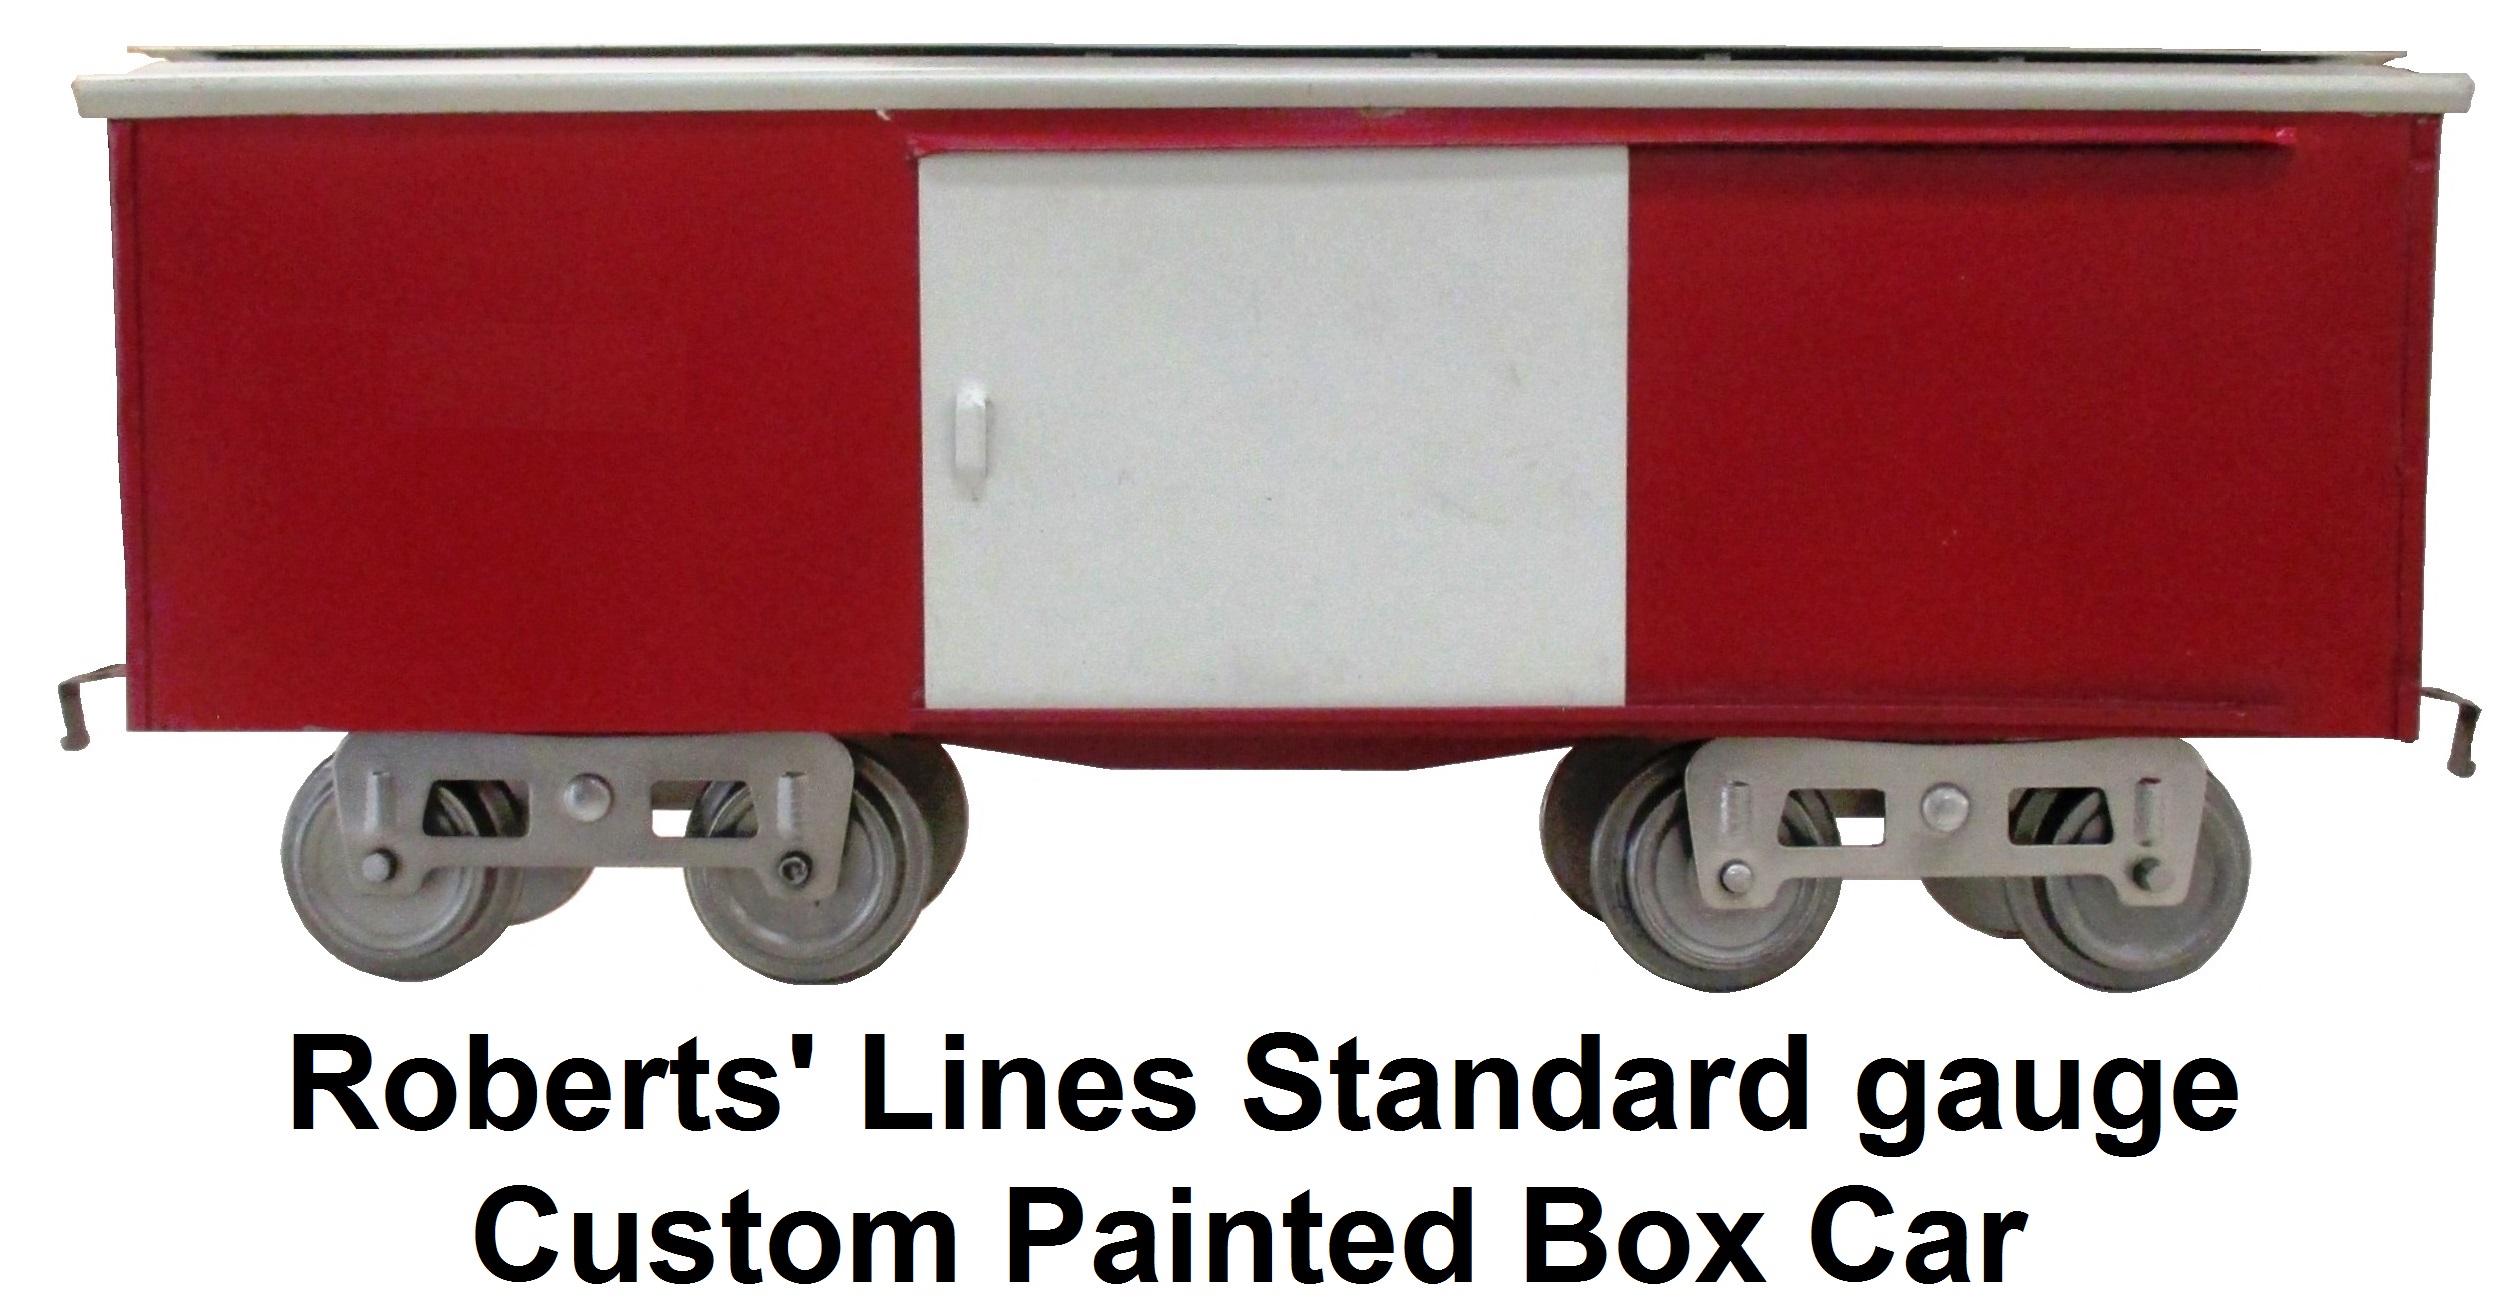 Roberts' Lines Standard gauge custom painted box car